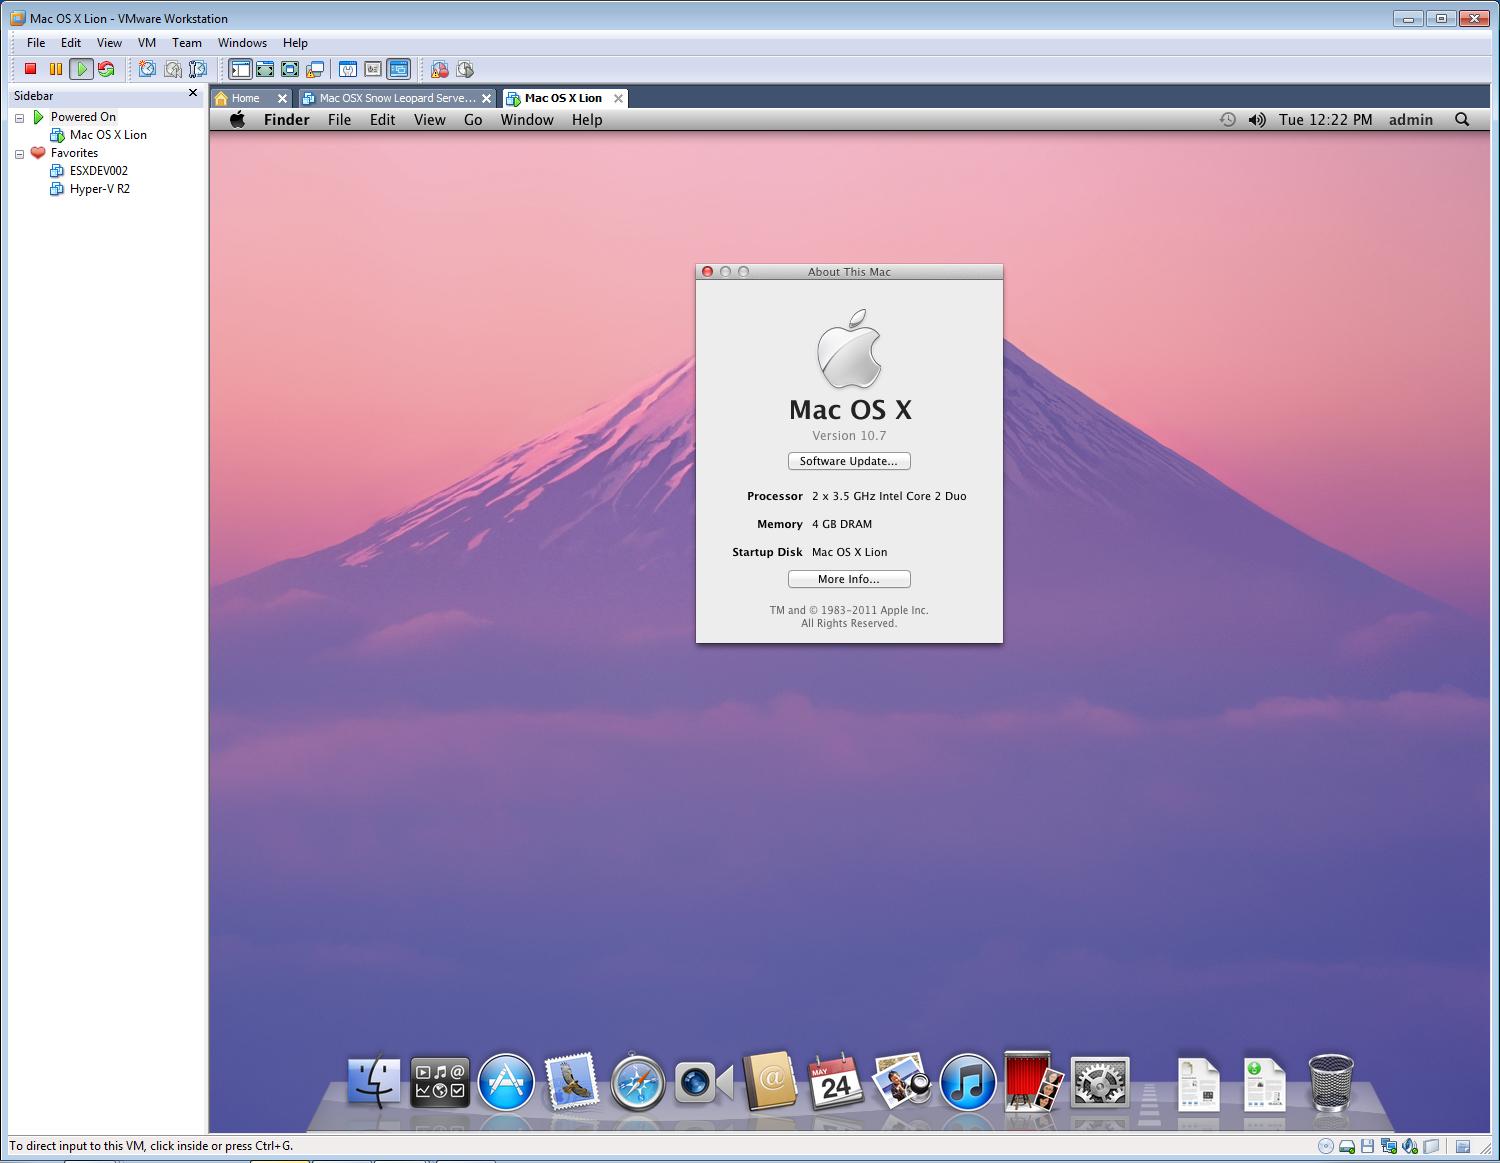 vmware for mac os x 10.7.5